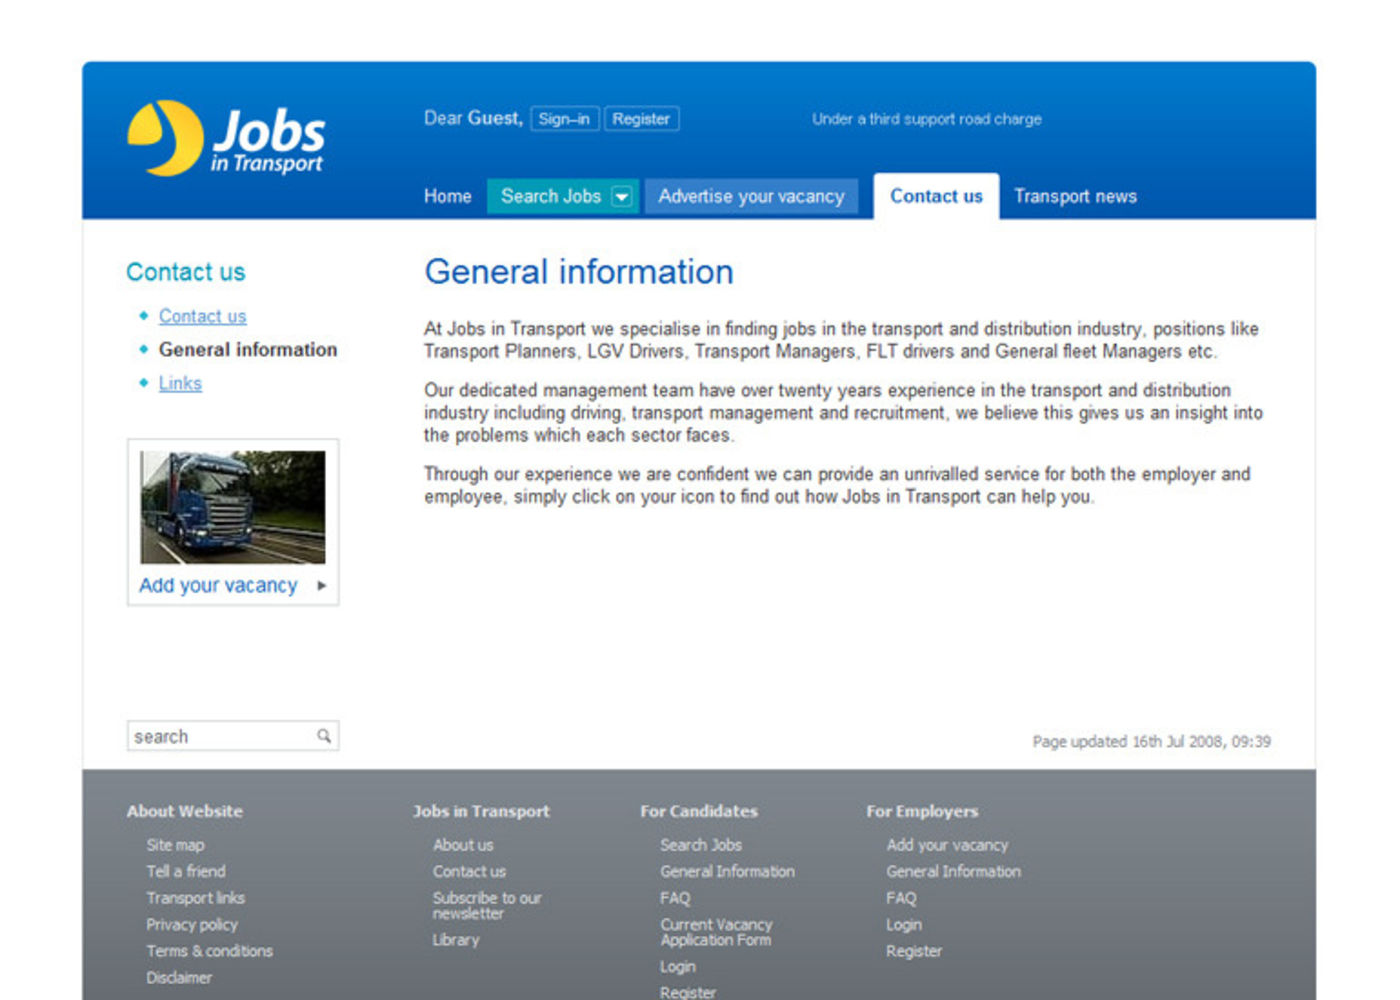 Jobs in Transport Regular page